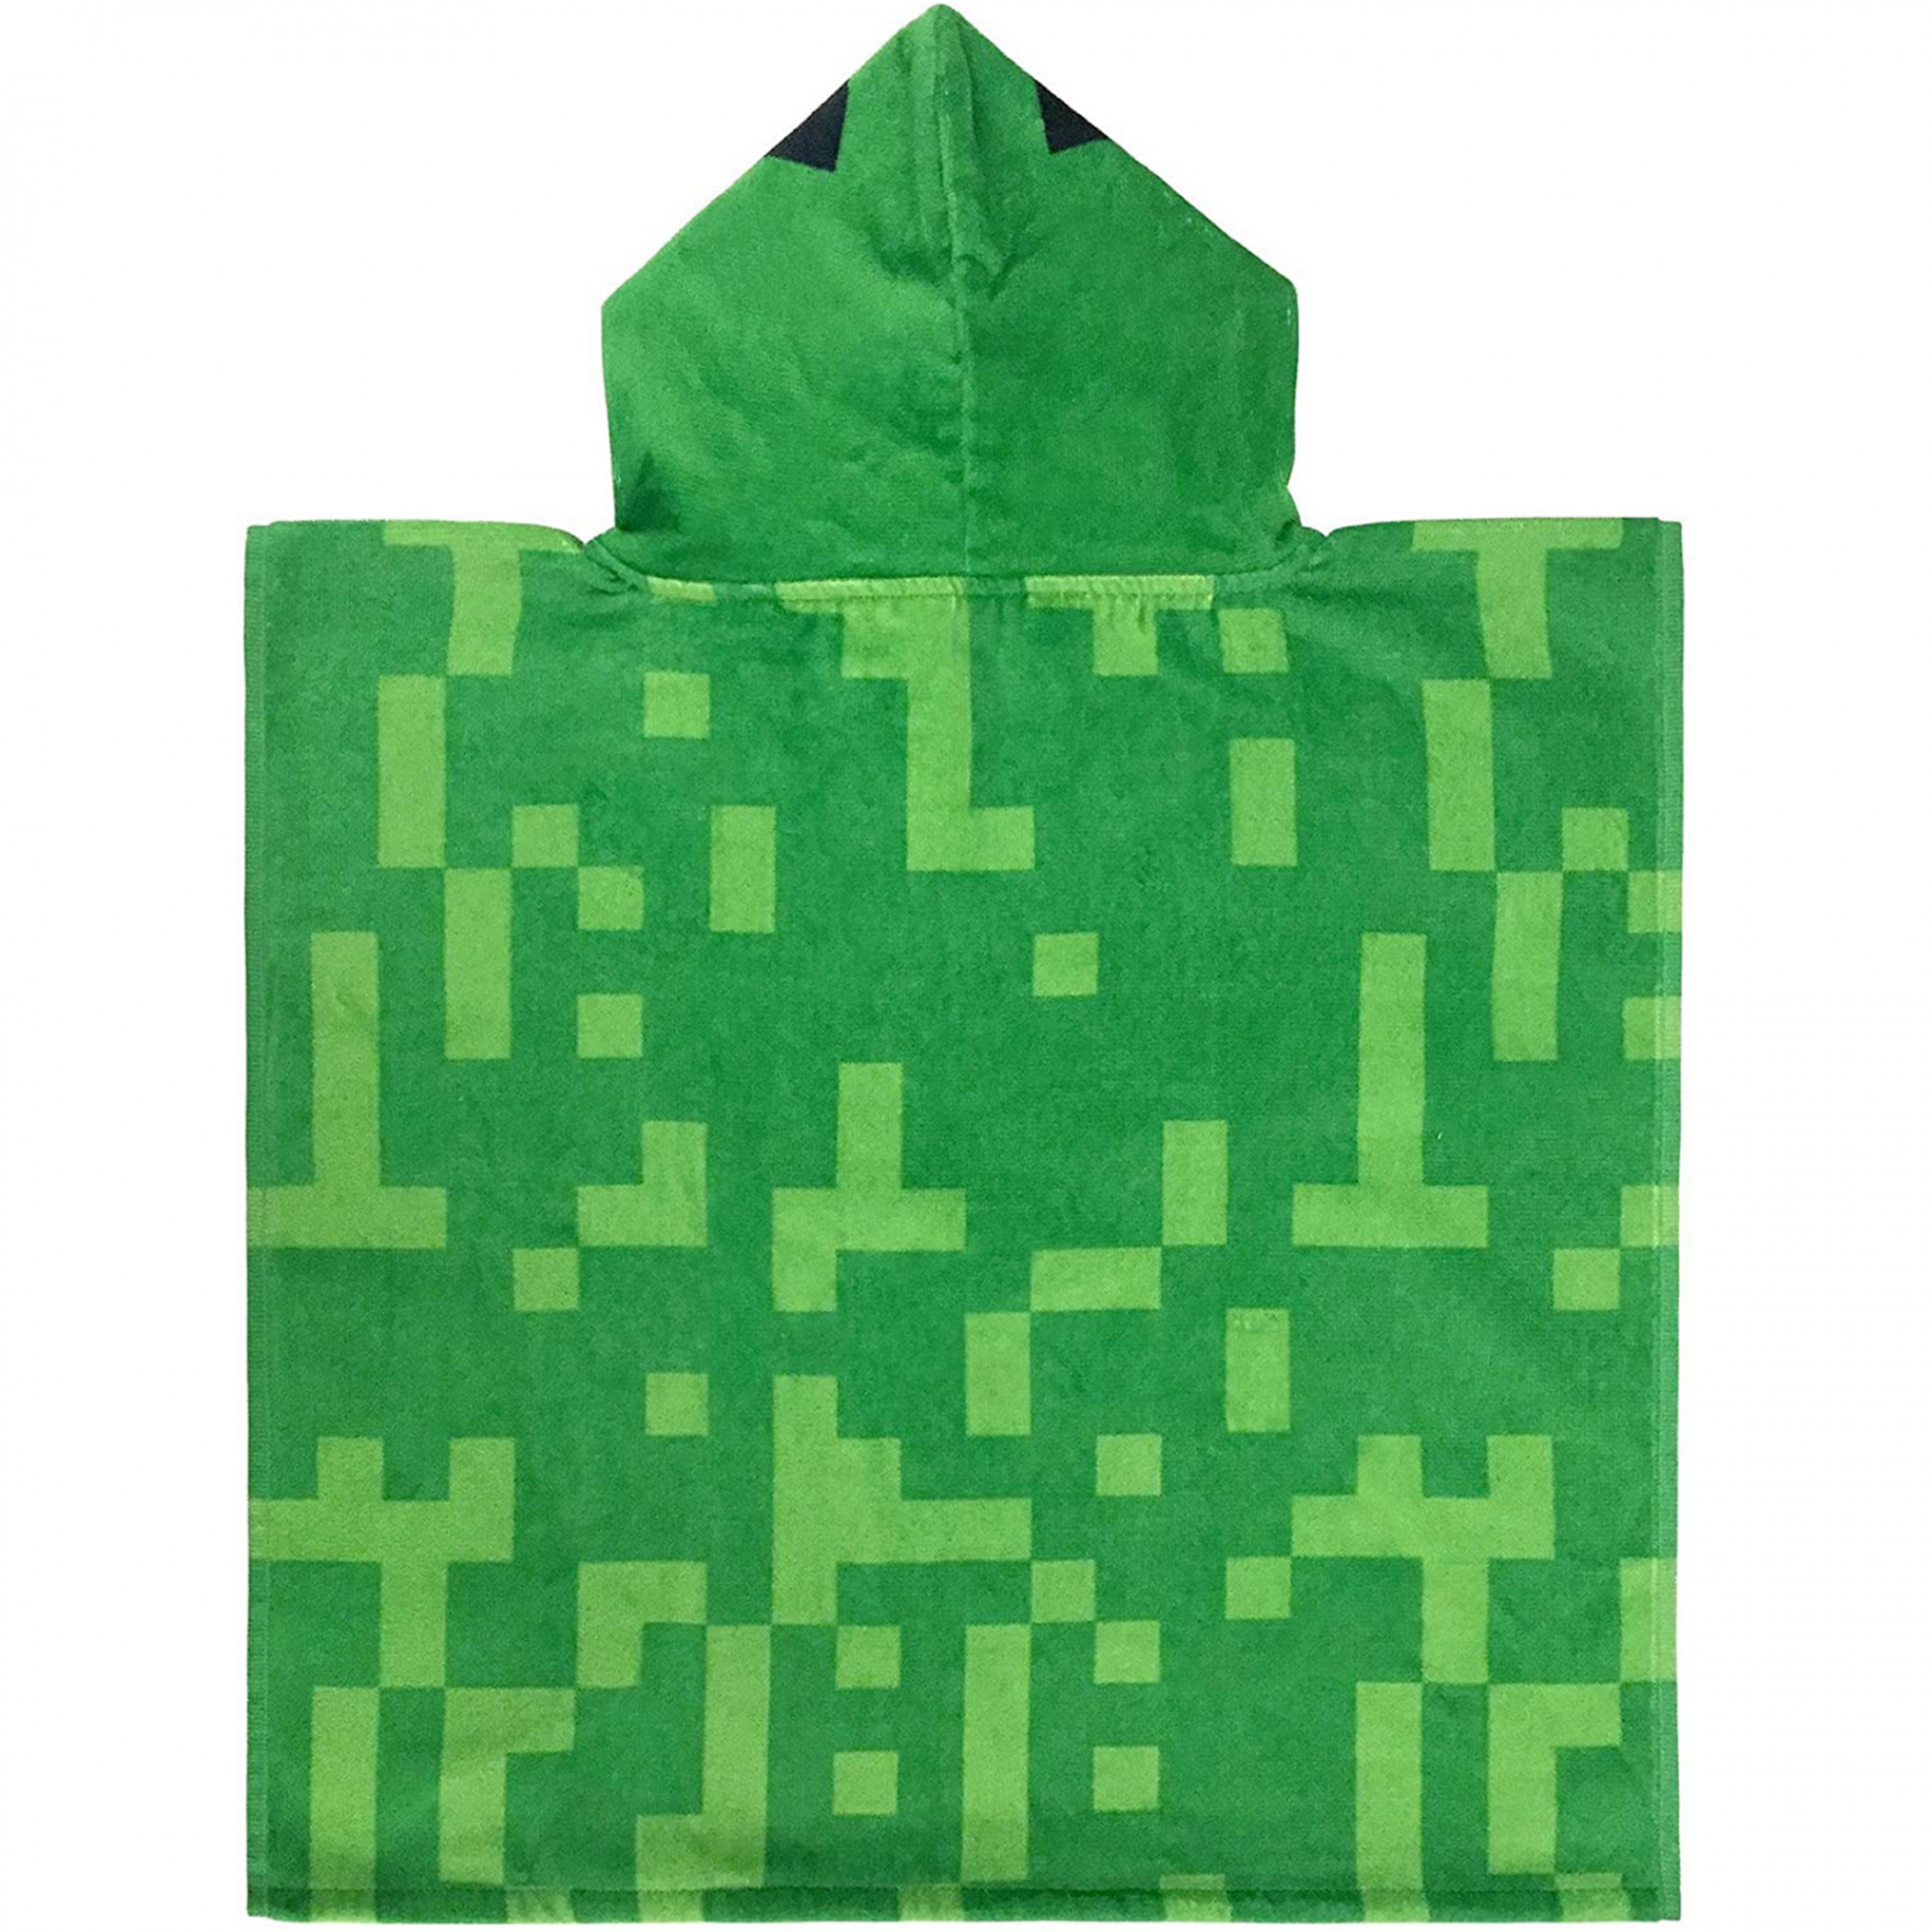 Minecraft Creeper Kids Beach Towel Hooded Poncho